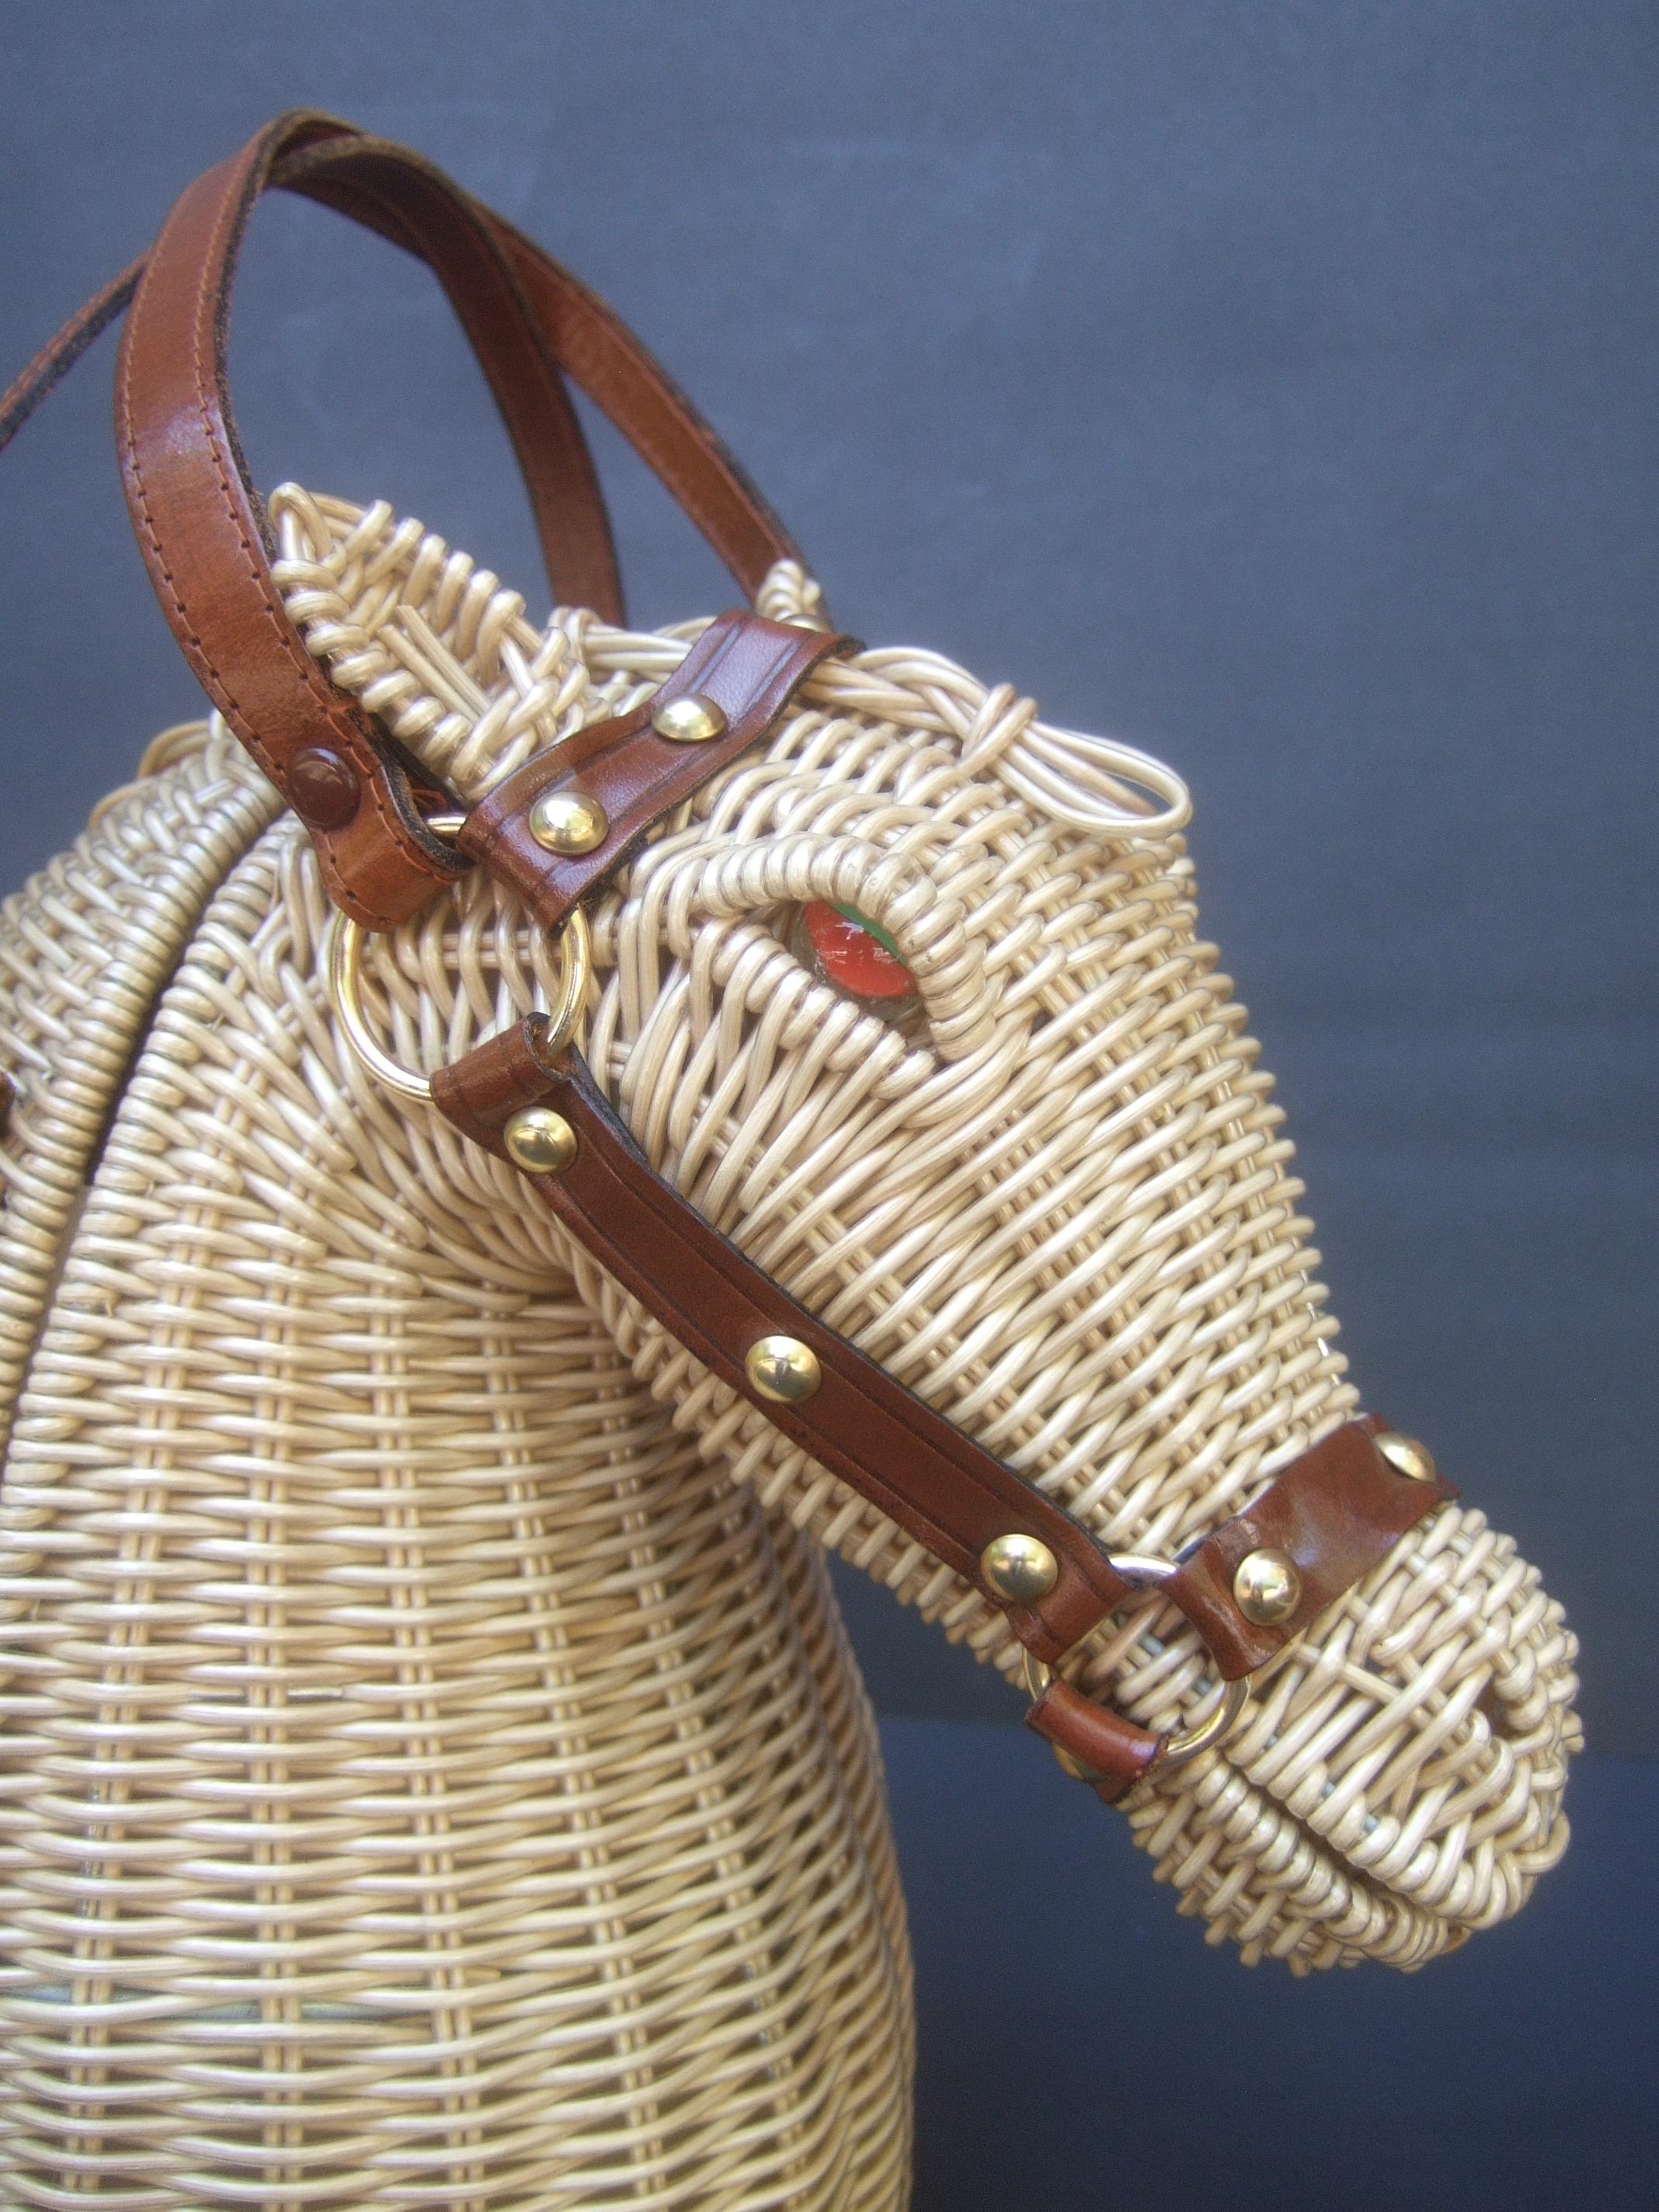 Extremely Rare Figural Wicker Artisan Horse Design Handbag c 1970 2